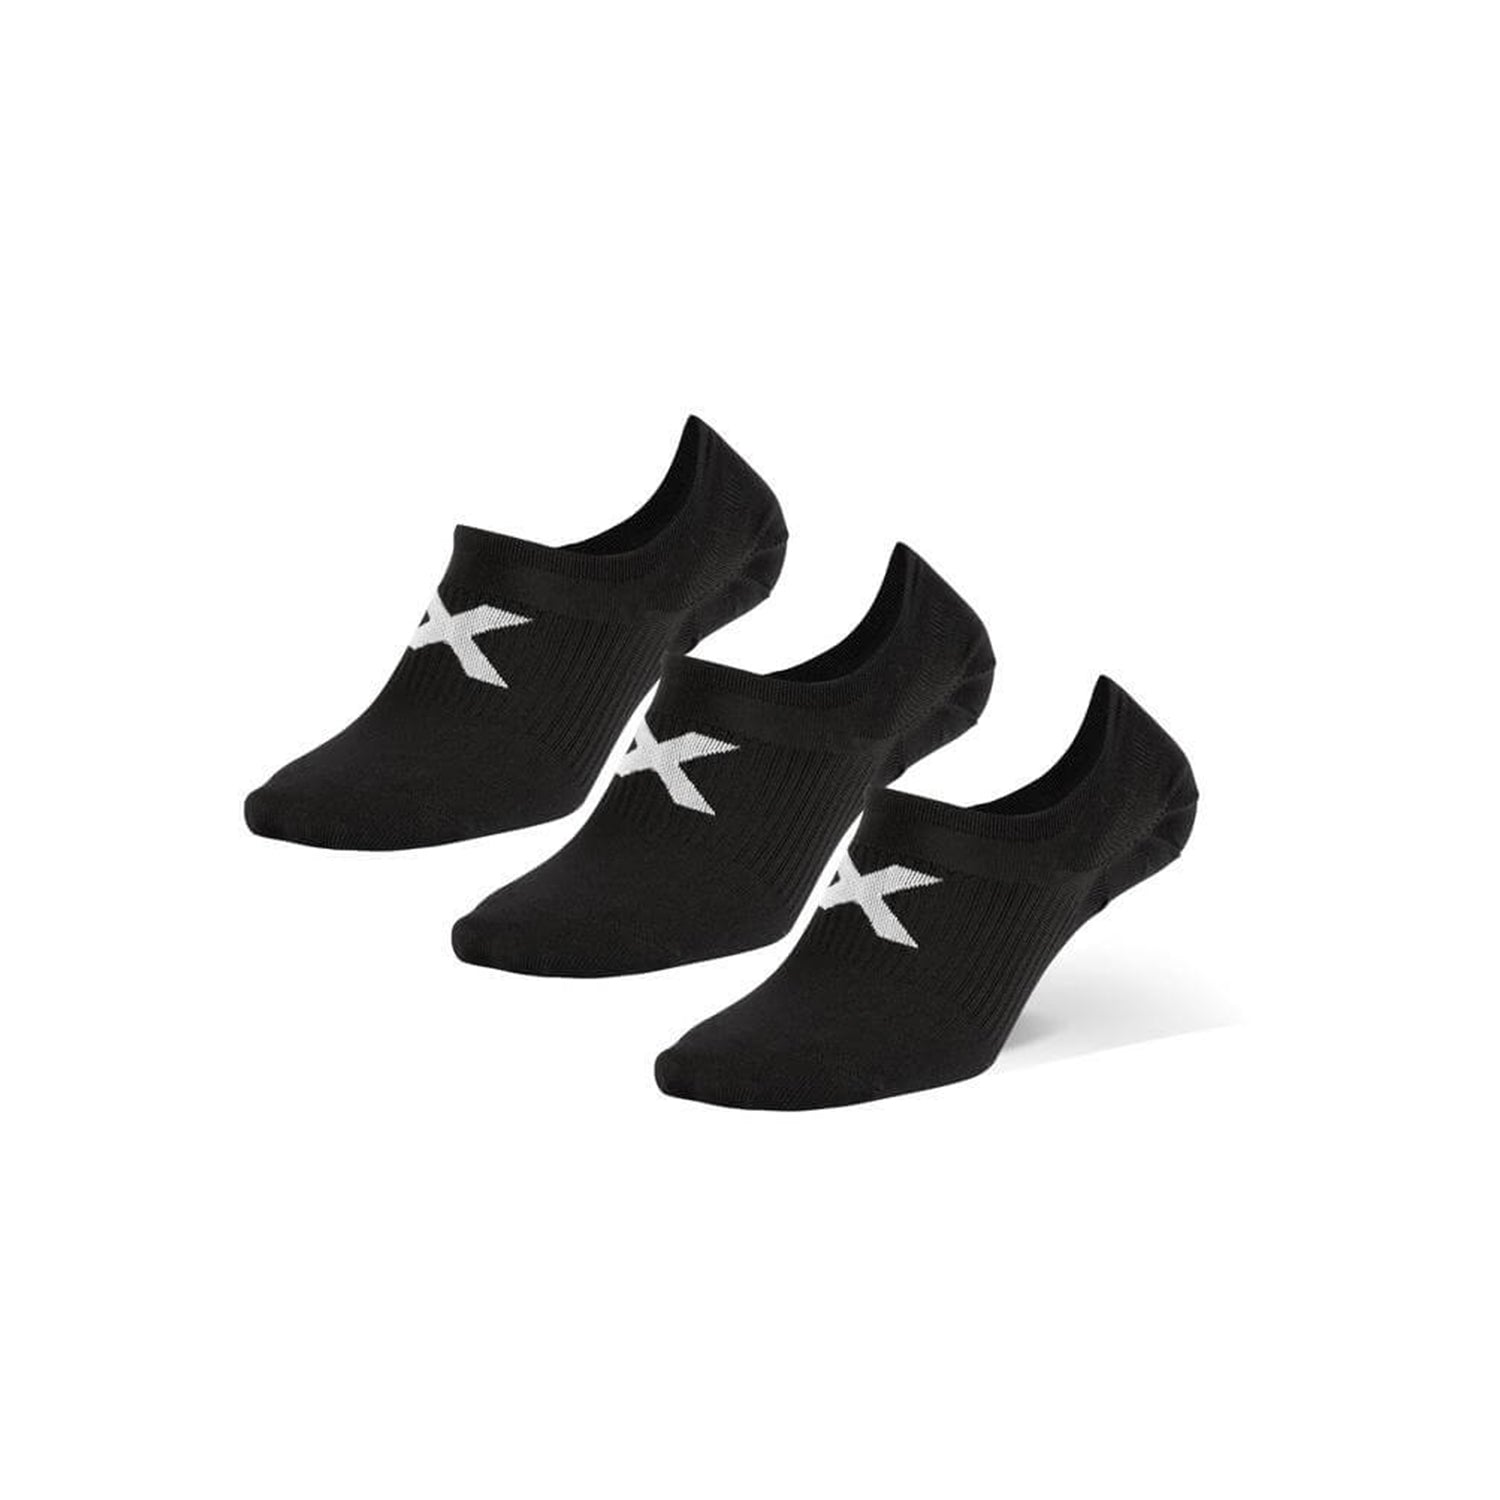 2XU Invisible Socks - 3 Pack (Black)